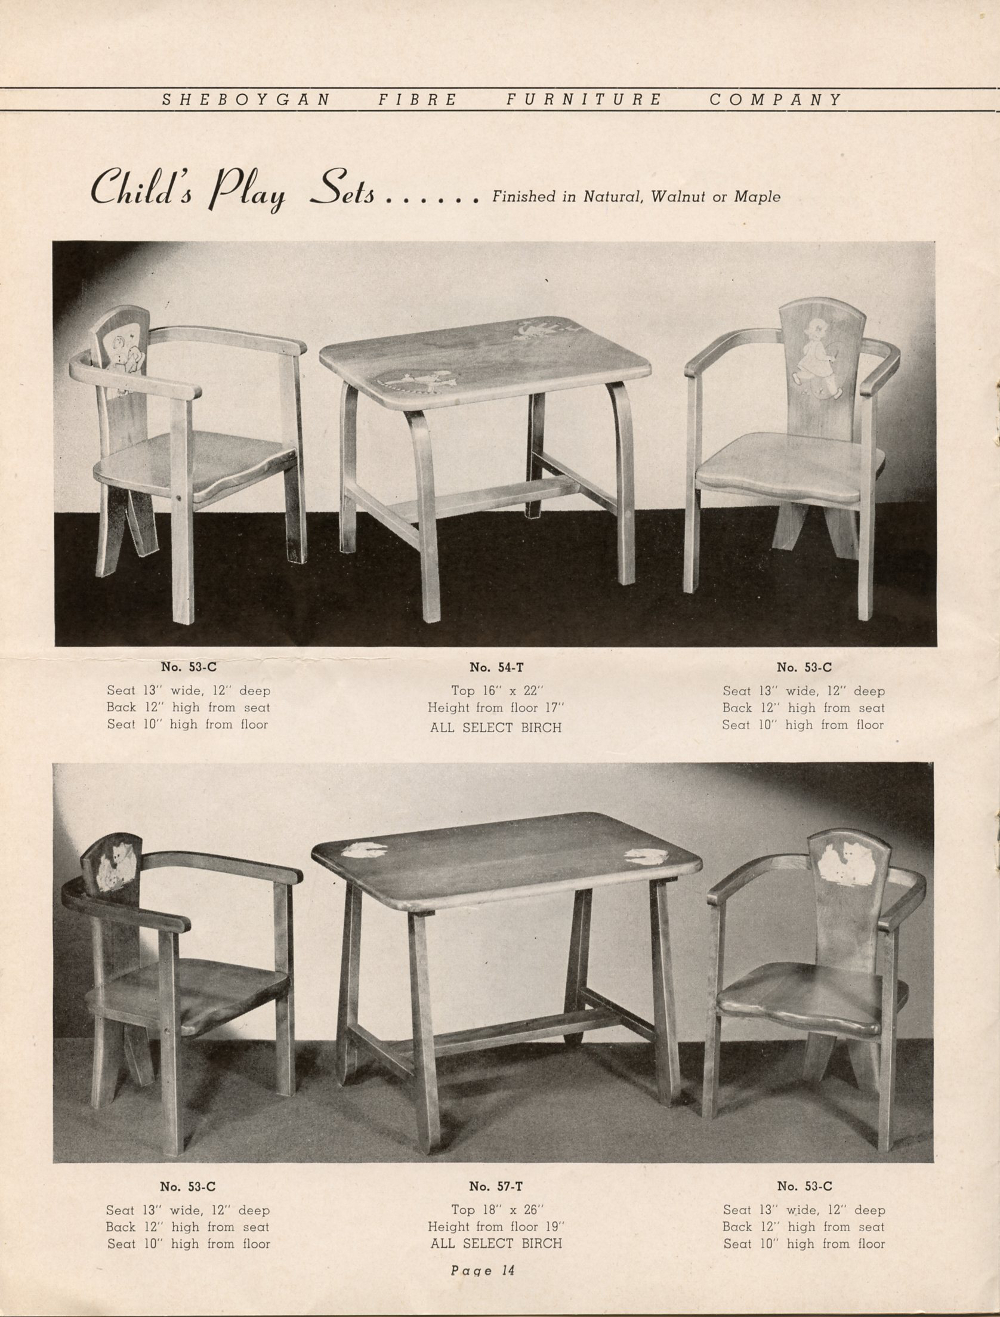 1942 Sheboygan Fibre Furniture Company Catalogue, Page 14